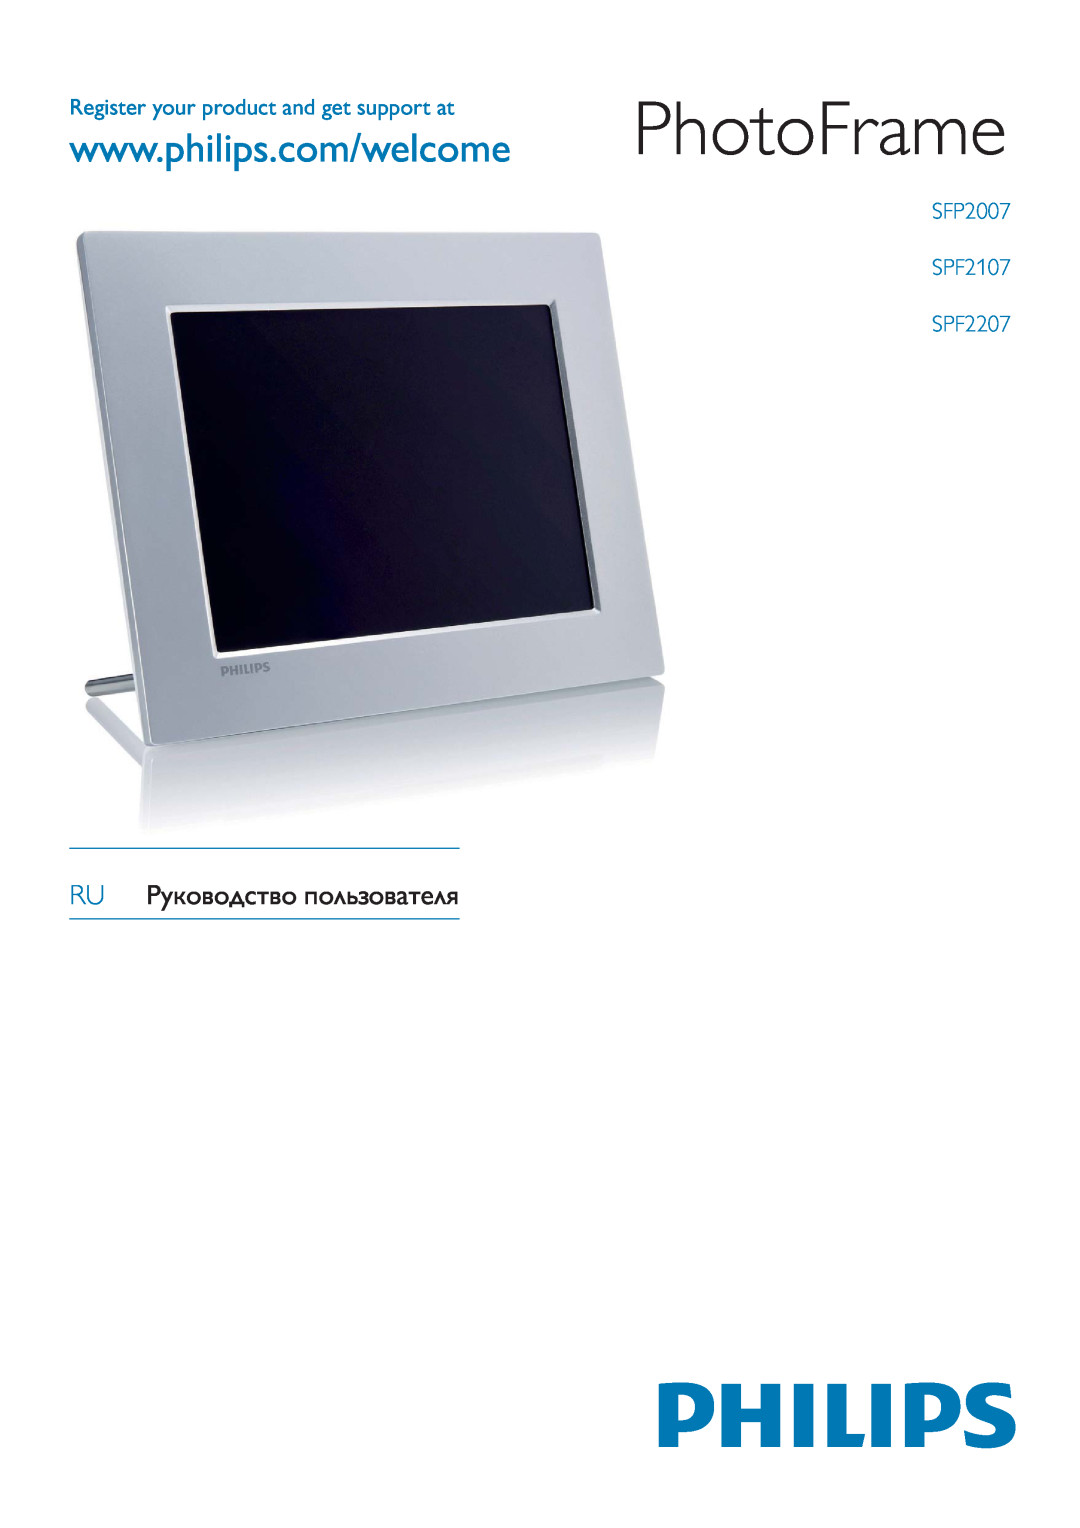 Philips SPF2207, SFP2007, SPF2107 manual RU ǝȀǷǻǯǻǱǾǿǯǻ ǼǻǸȉǴǻǯǭǿǲǸȌ, PhotoFrame, Register your product and get support at 